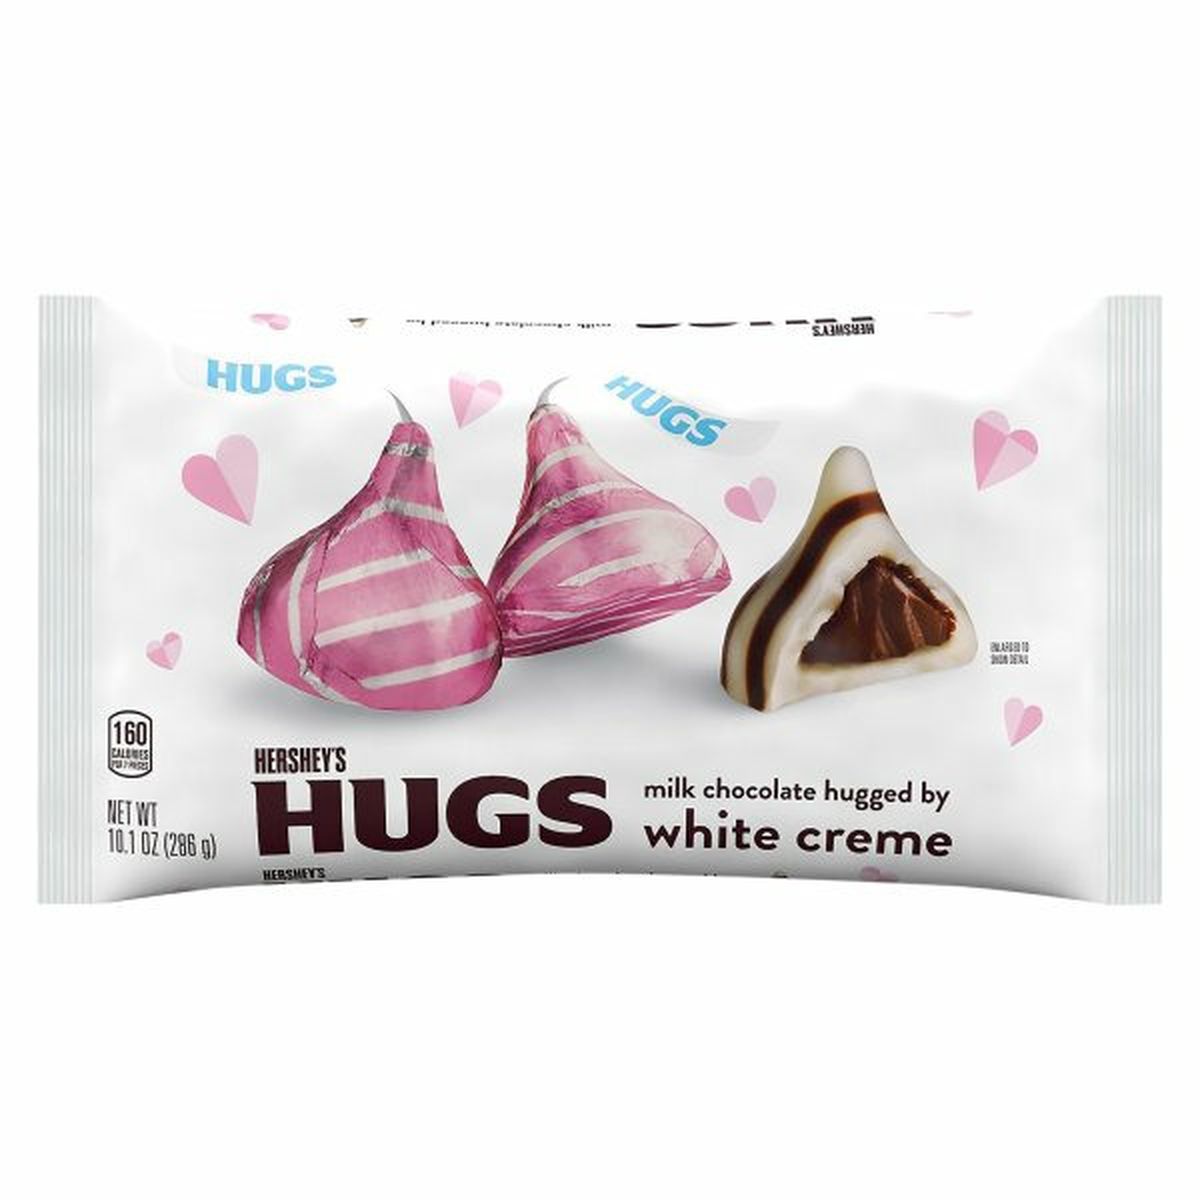 Calories in Hershey's Hugs Milk Chocolate, Hugged by White Creme